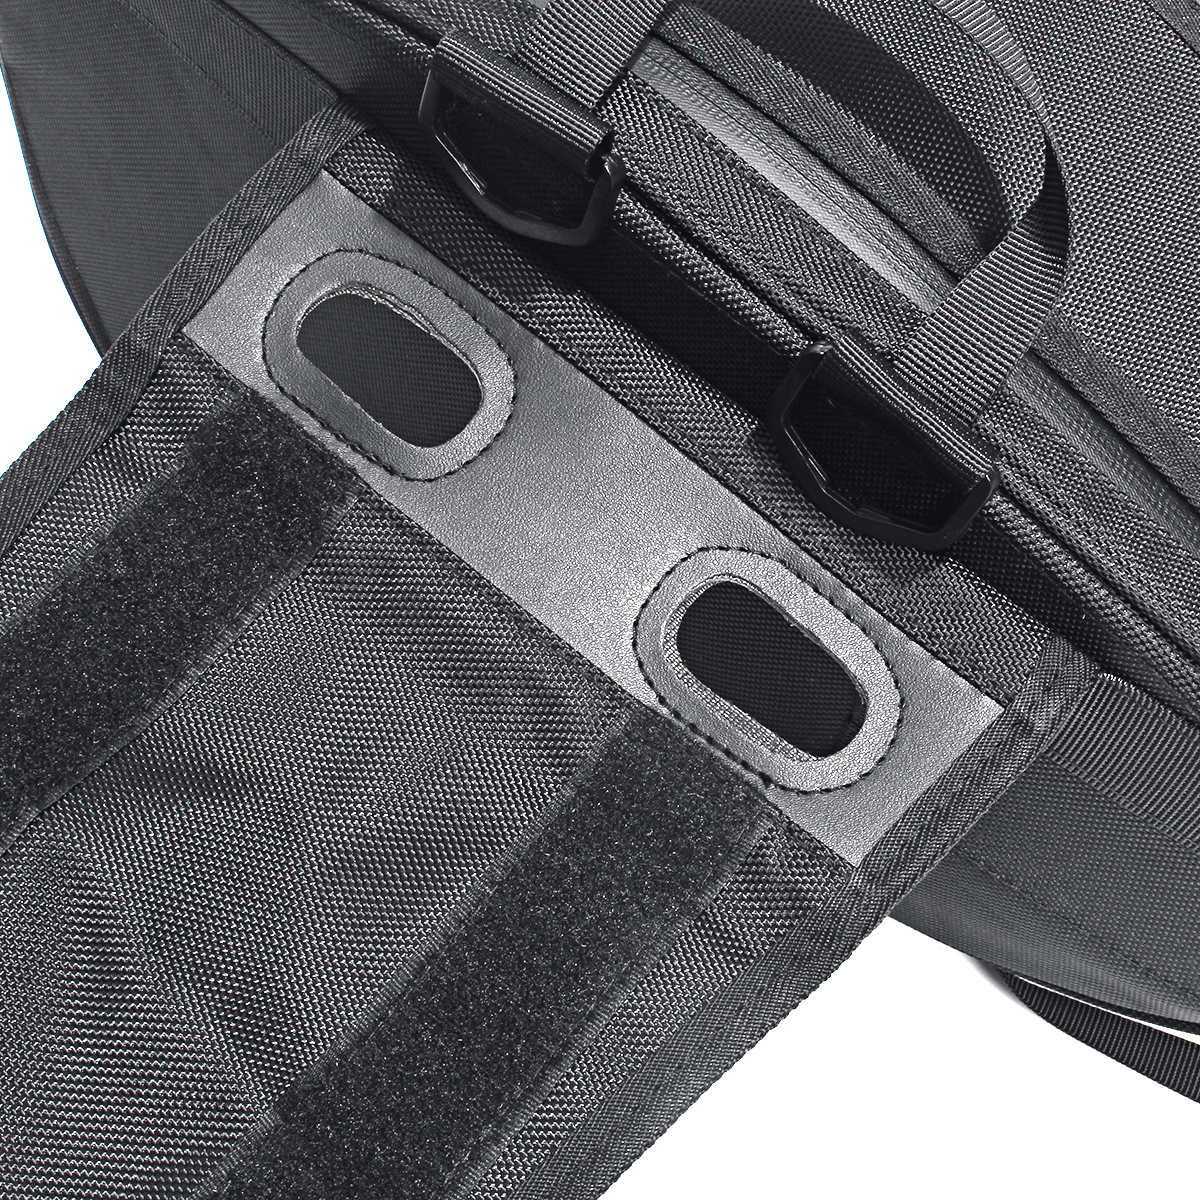 Saddlebags Rear Bag Package Multifunction Saddle Shoulder Send Waterproof Cover